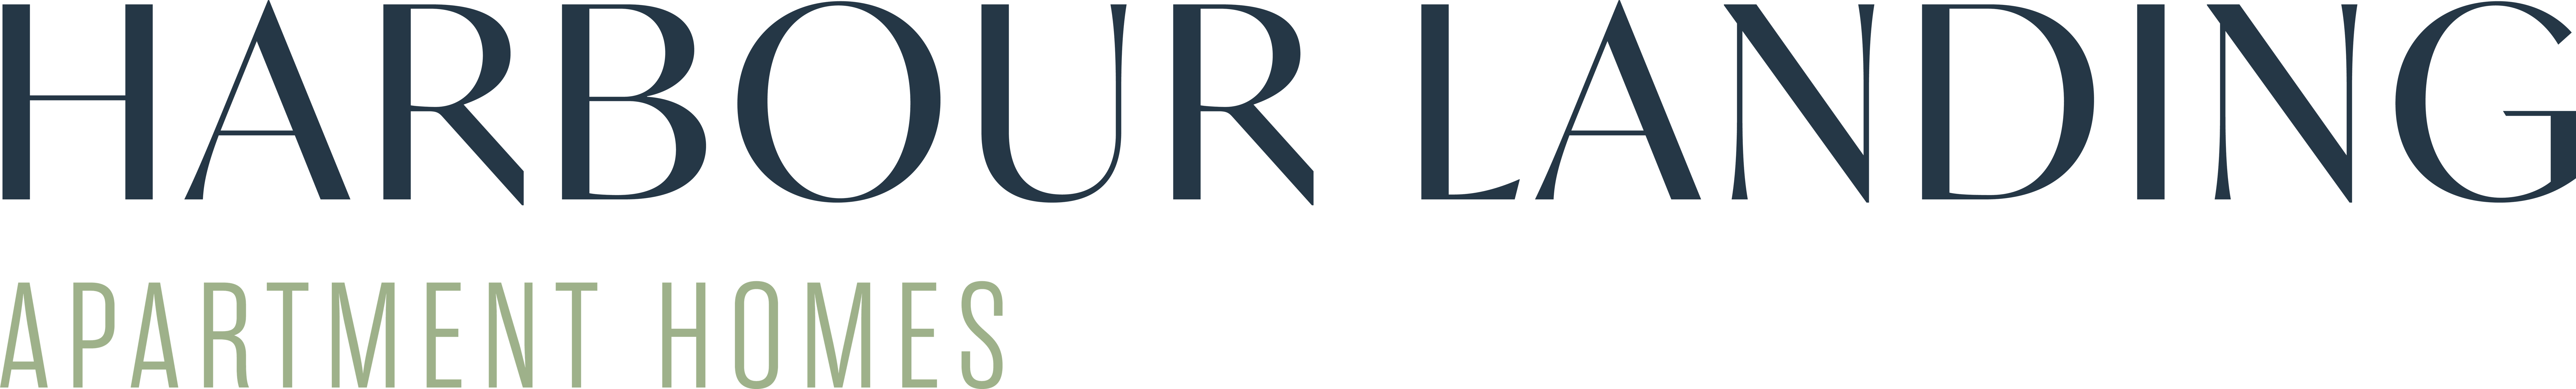 Harbour Landing logo